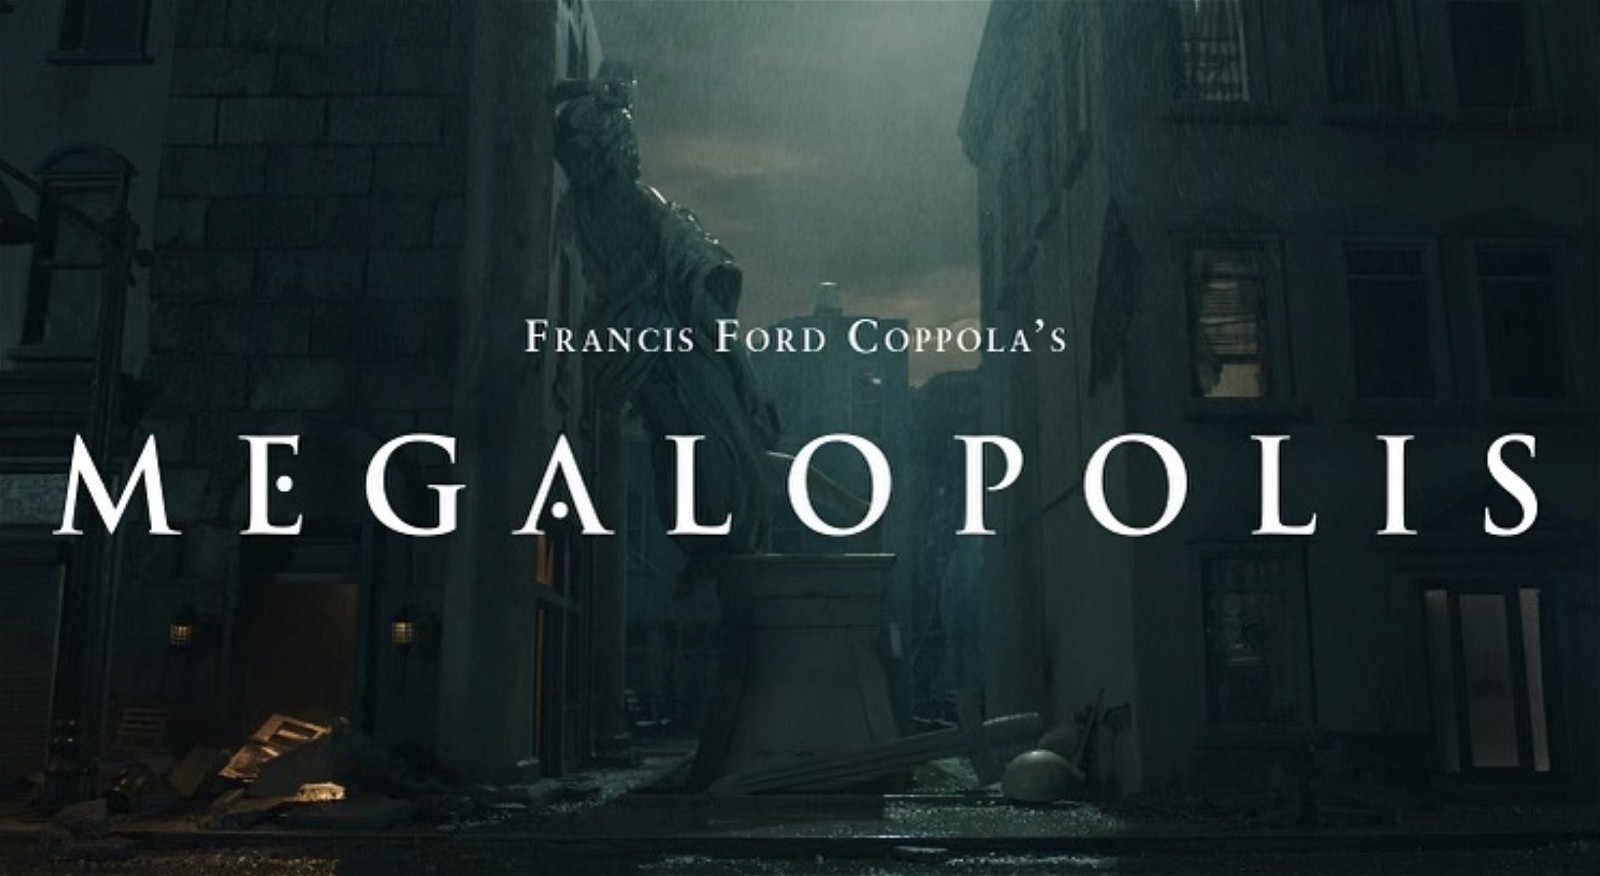 Francis Ford Coppola's Megalopolis